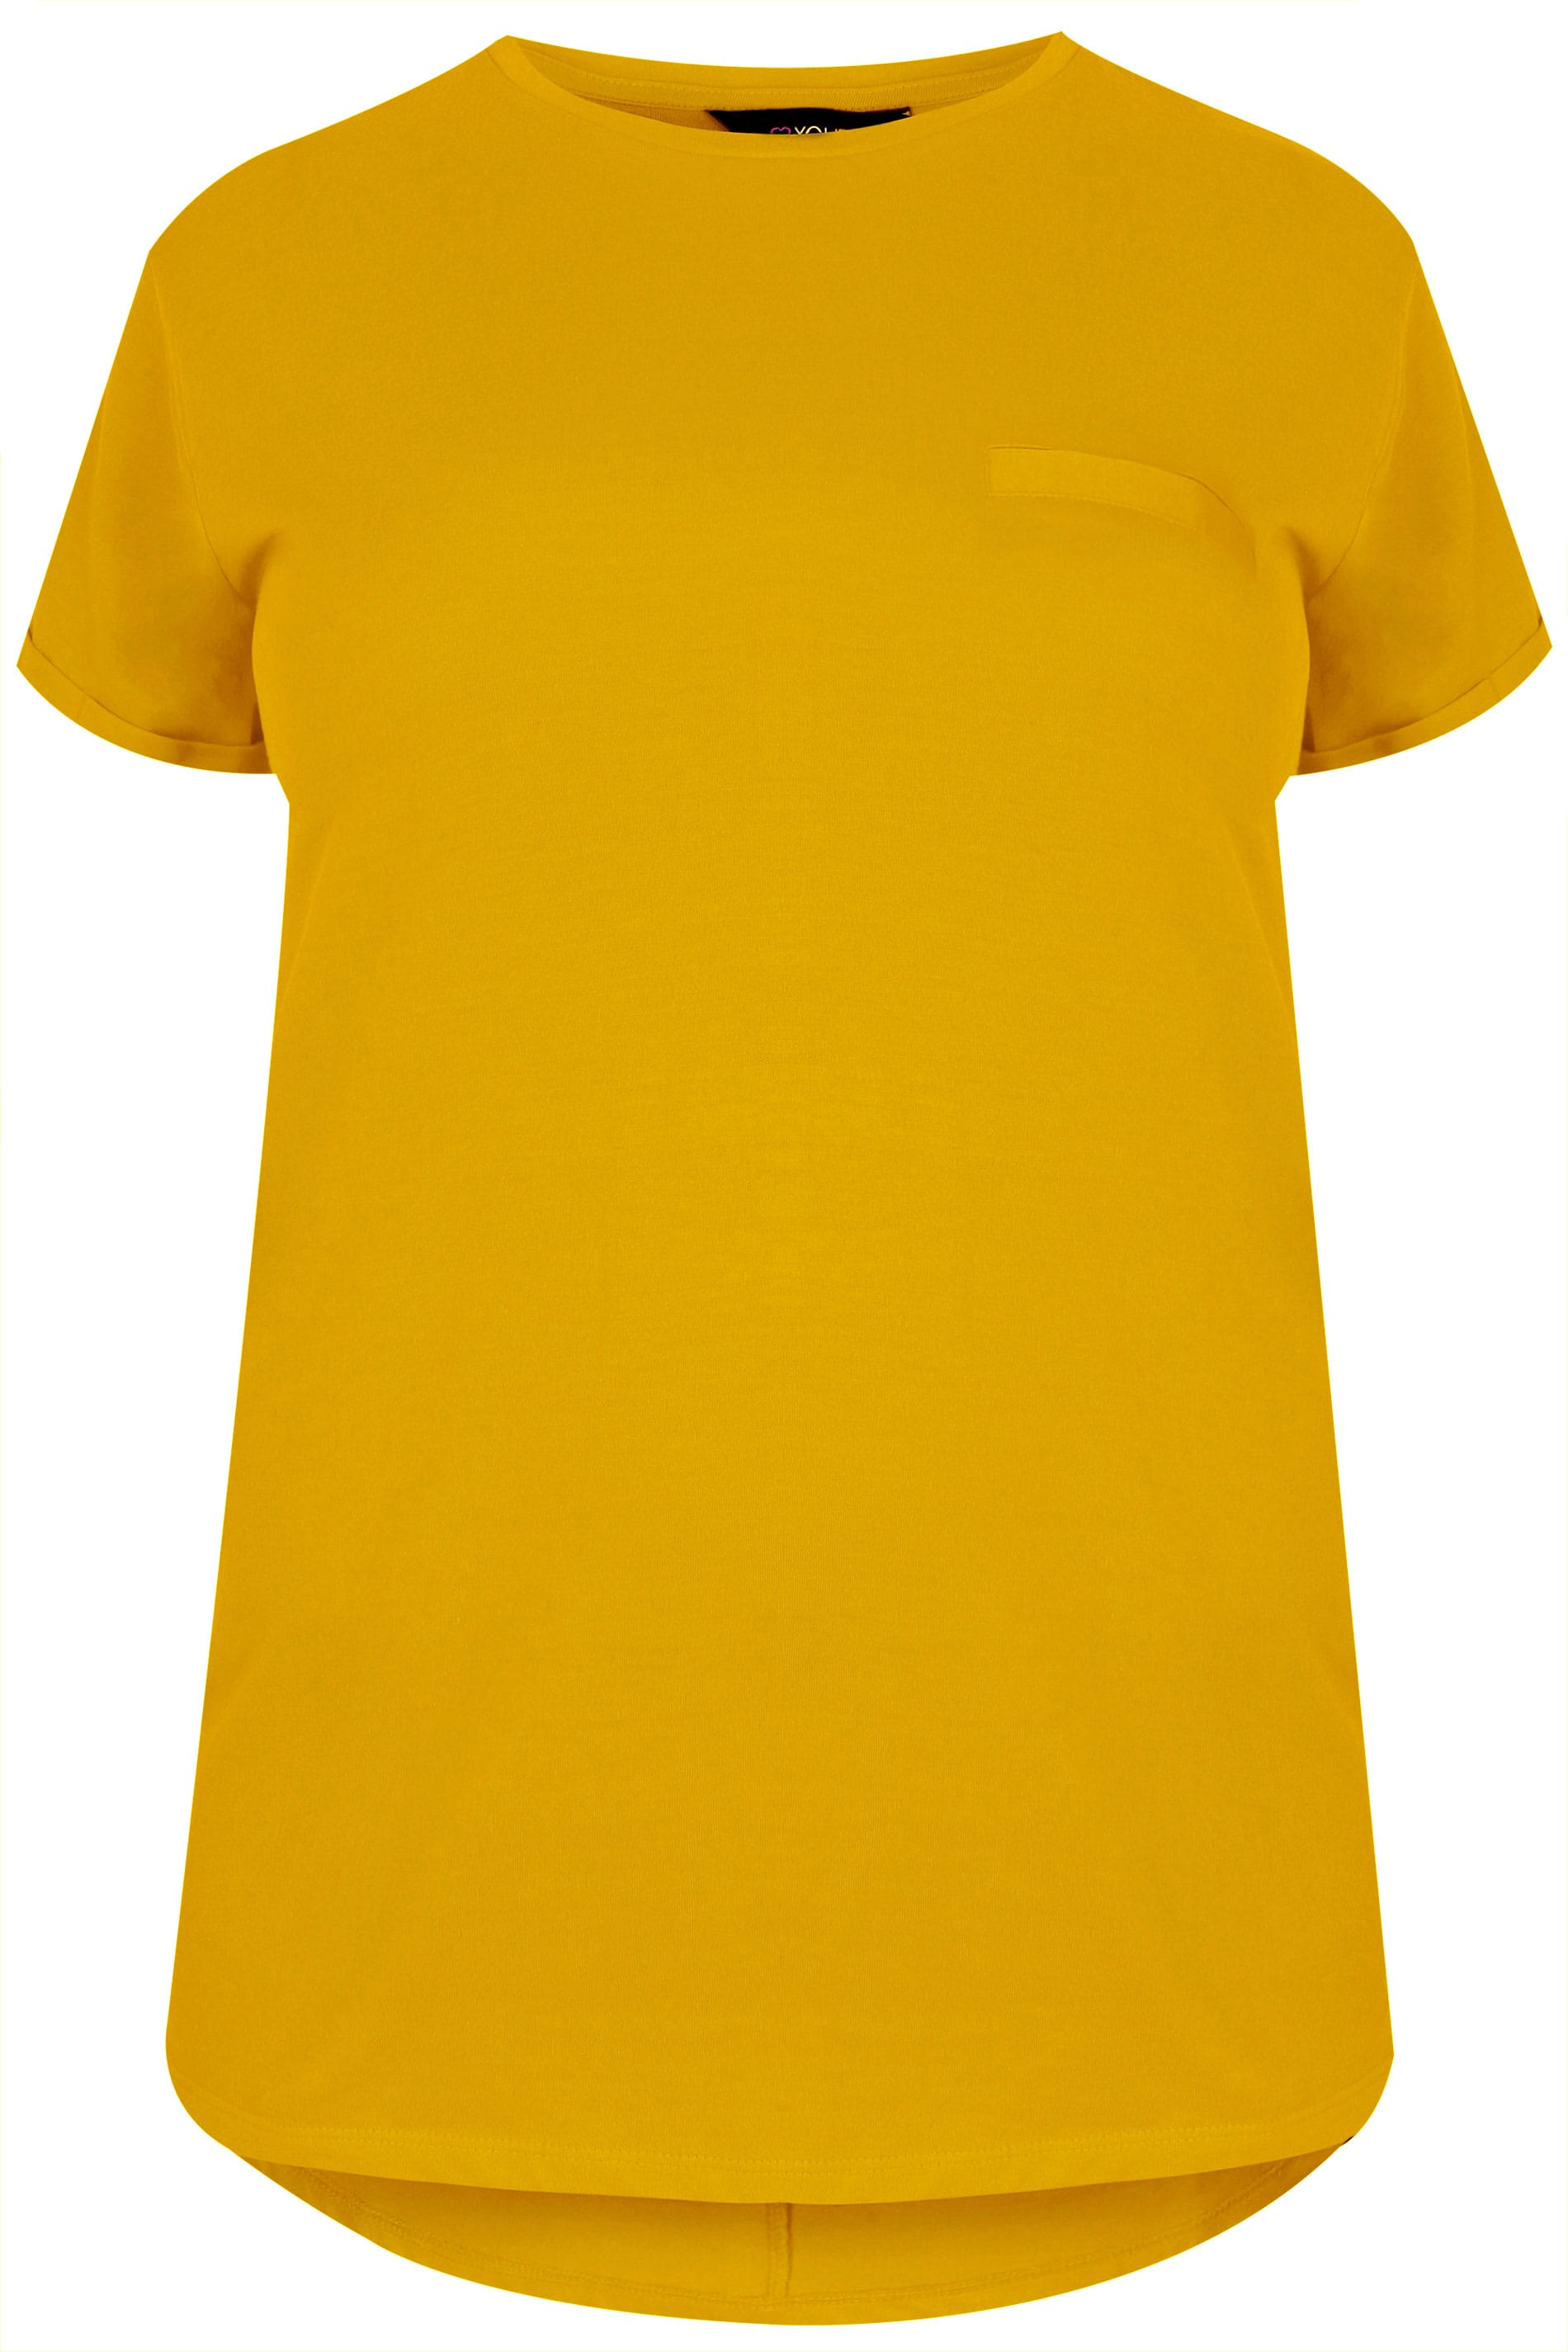 Mustard Yellow Mock Pocket T-Shirt With Curved Hem, plus ...